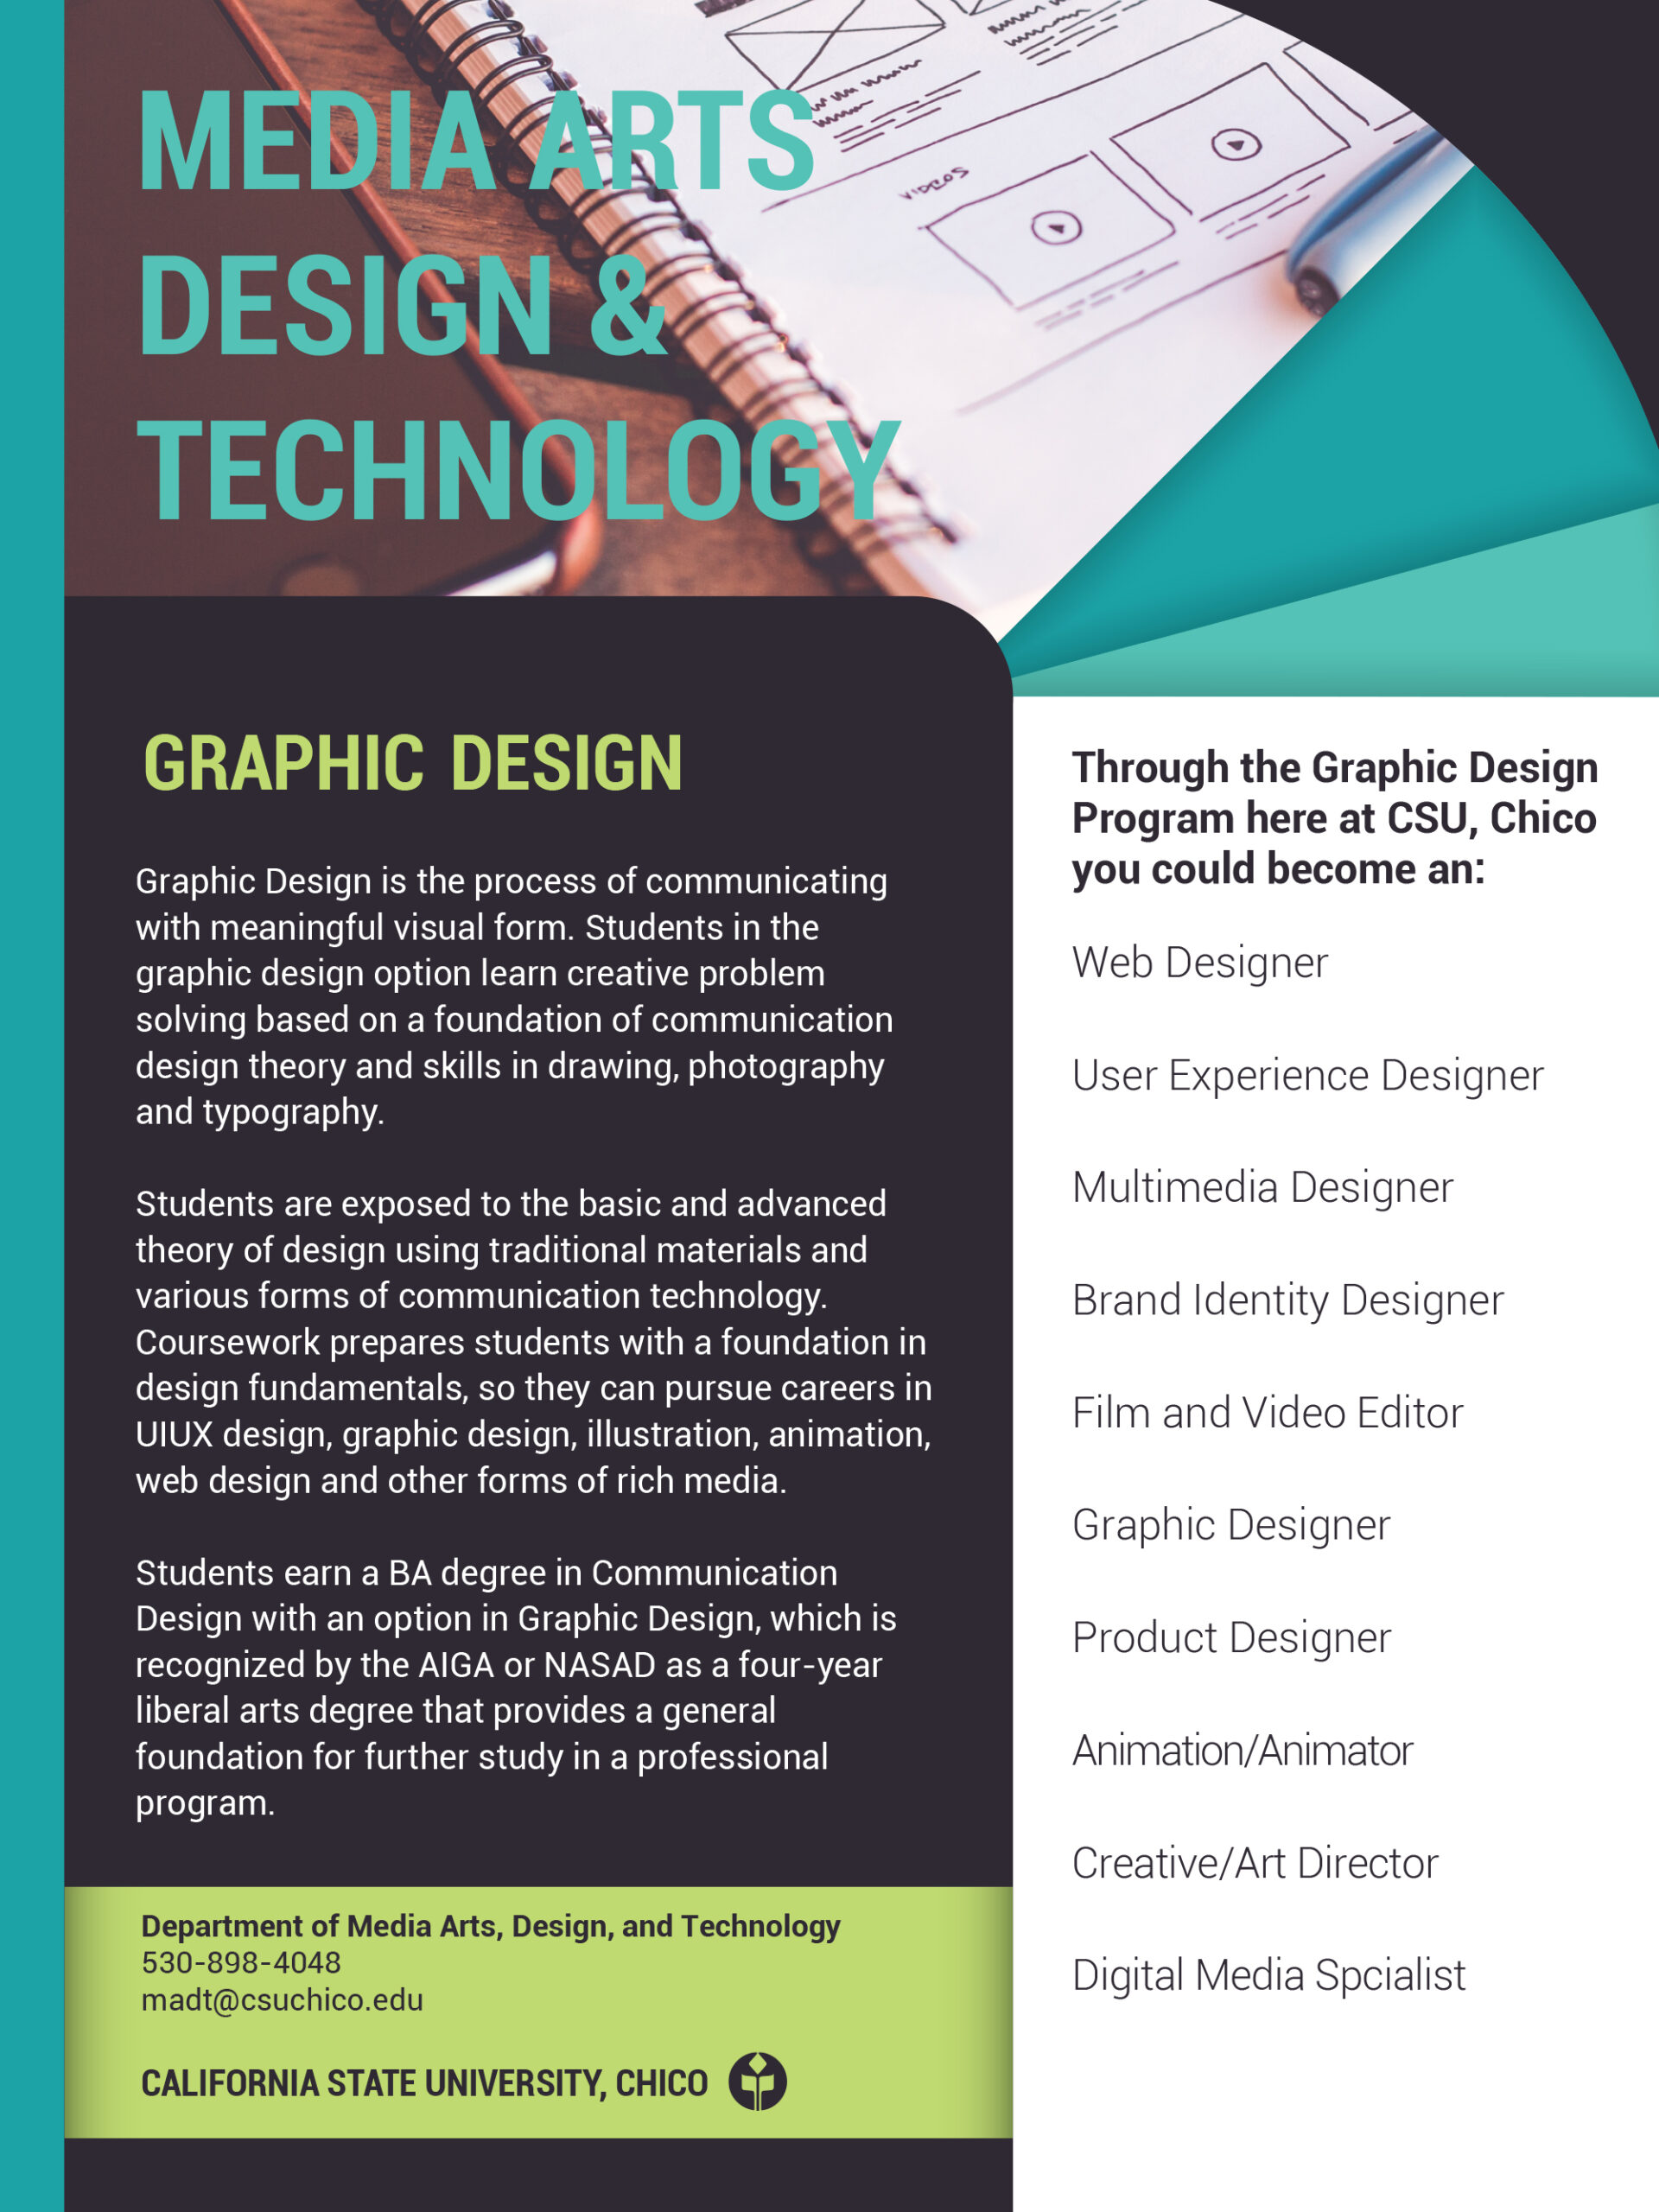 MADT Graphic Design Program Card